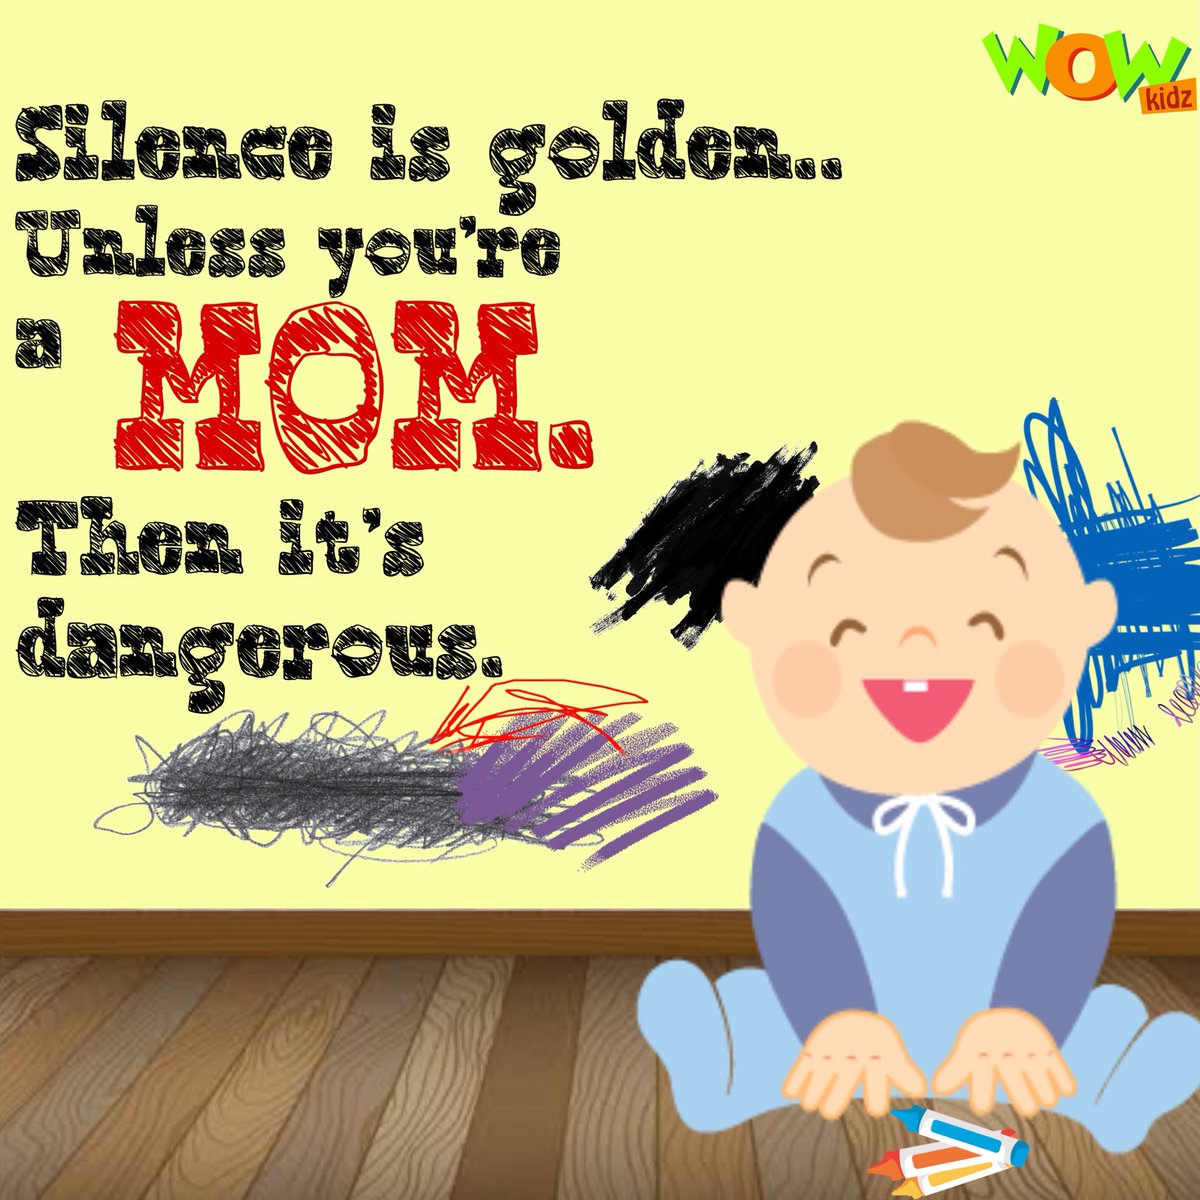 They’re ALWAYS up to something aren’t they?👶🏻 #WowKidz #memes #funnymemes #mommemes #mommyproblems #momlife #mommylove #mothers #motherhood #parenting #parentlife #babythings #parenting101 #parentingmoment #mommies #mommyhood #mommyblogger #instamoms #kids #kidsmemes #babymemes